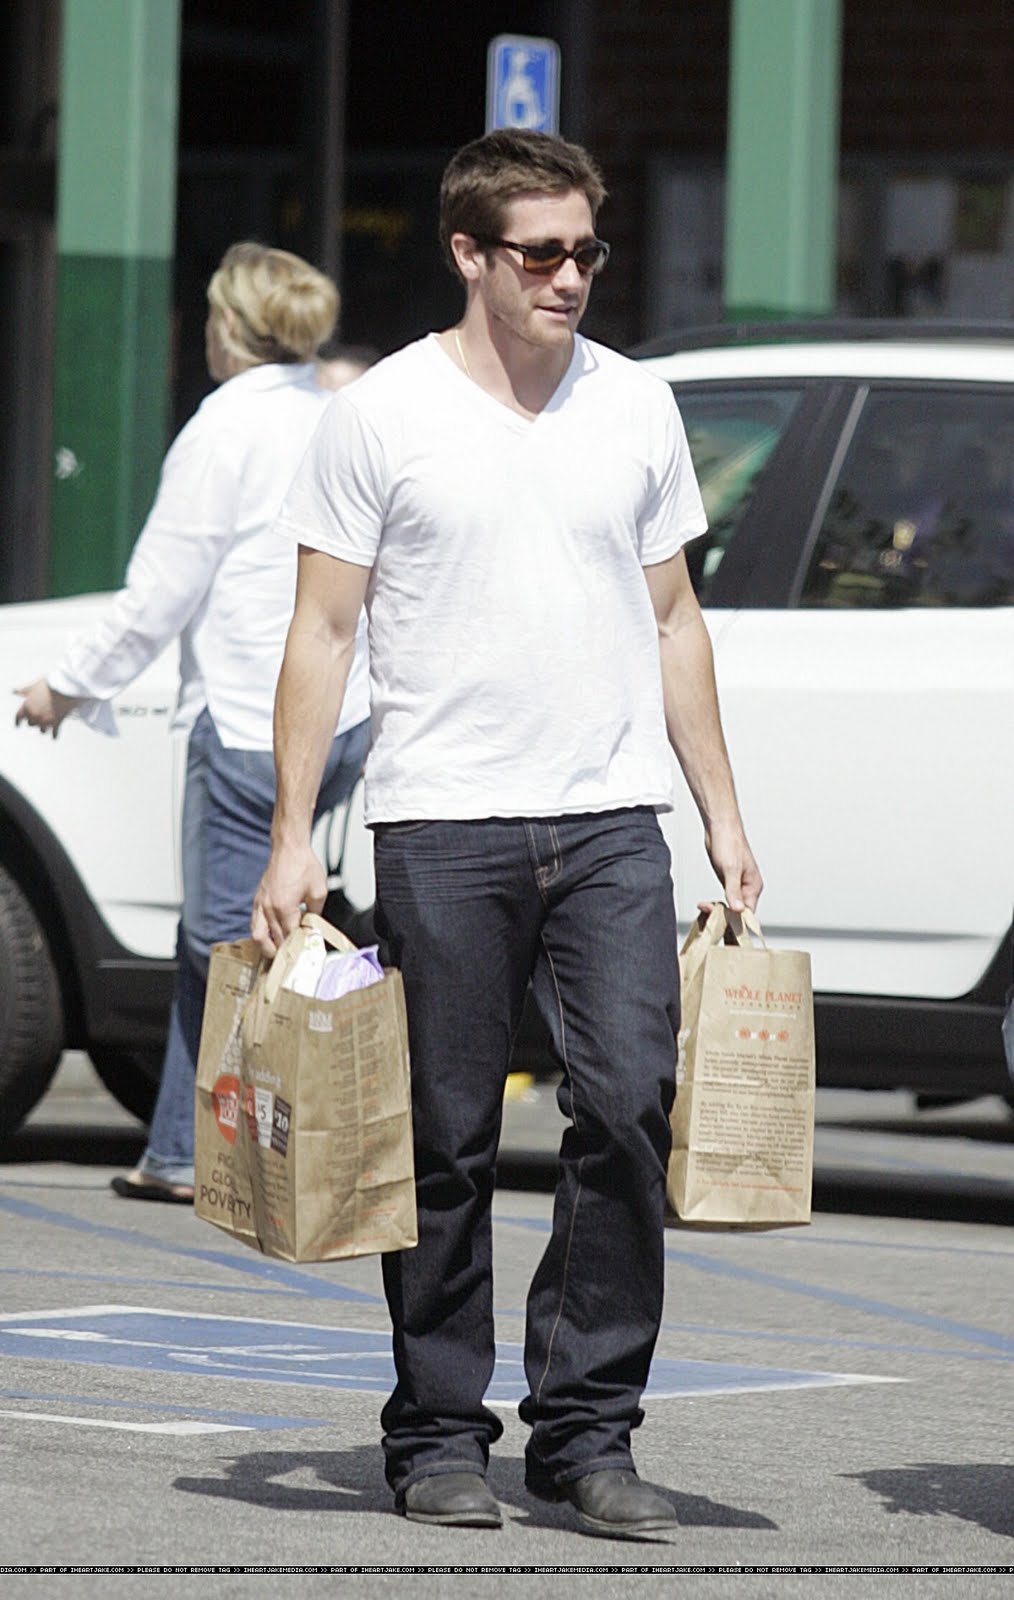 [Jake+Grocery+Shopping+bag+2.jpg]